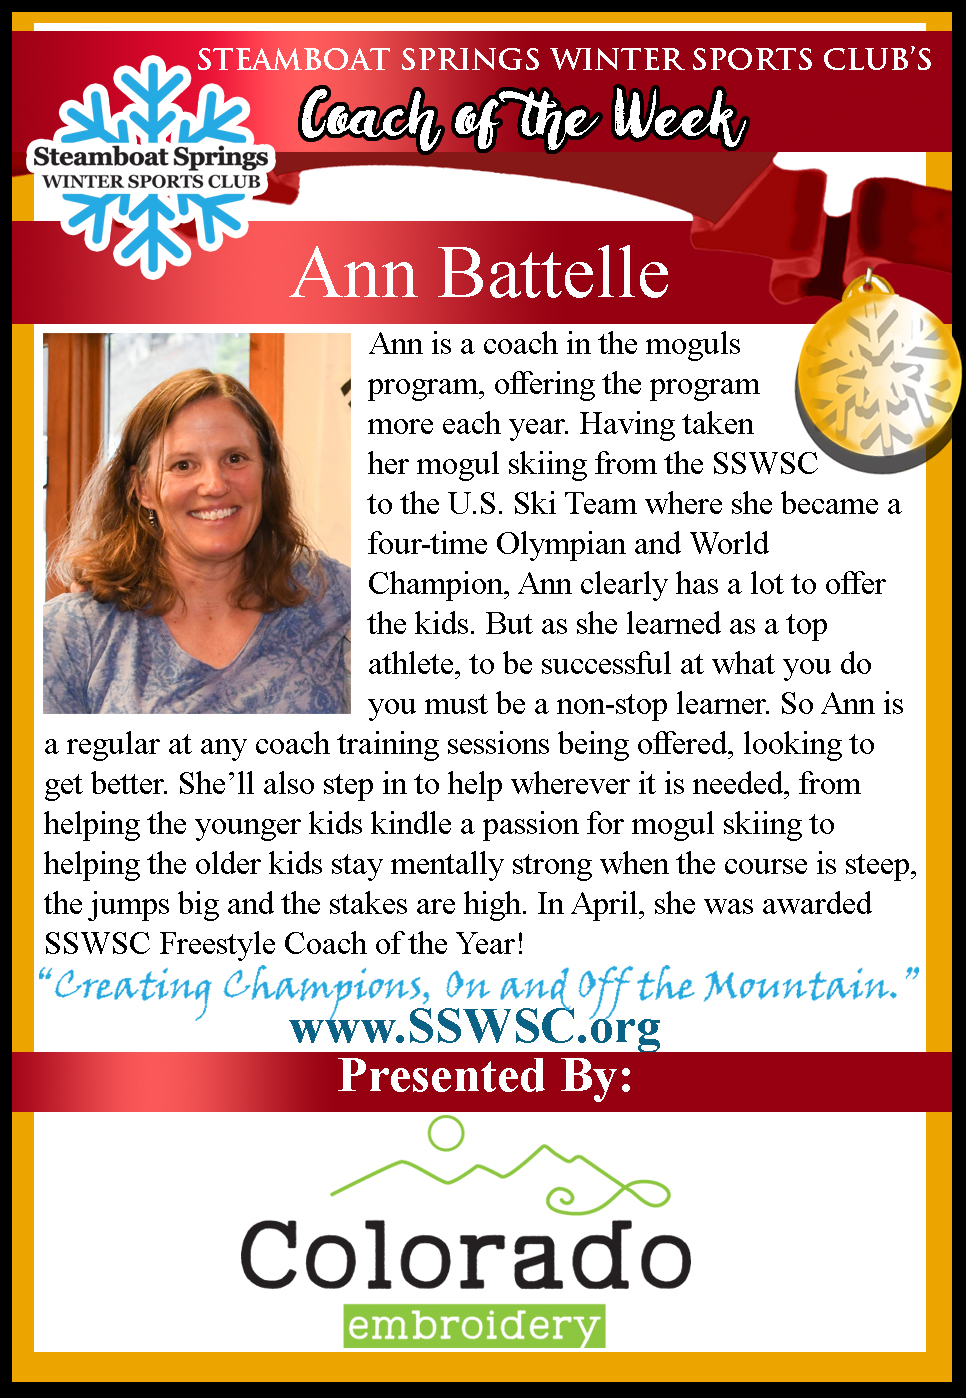 Coach of the Week, Anne Battelle